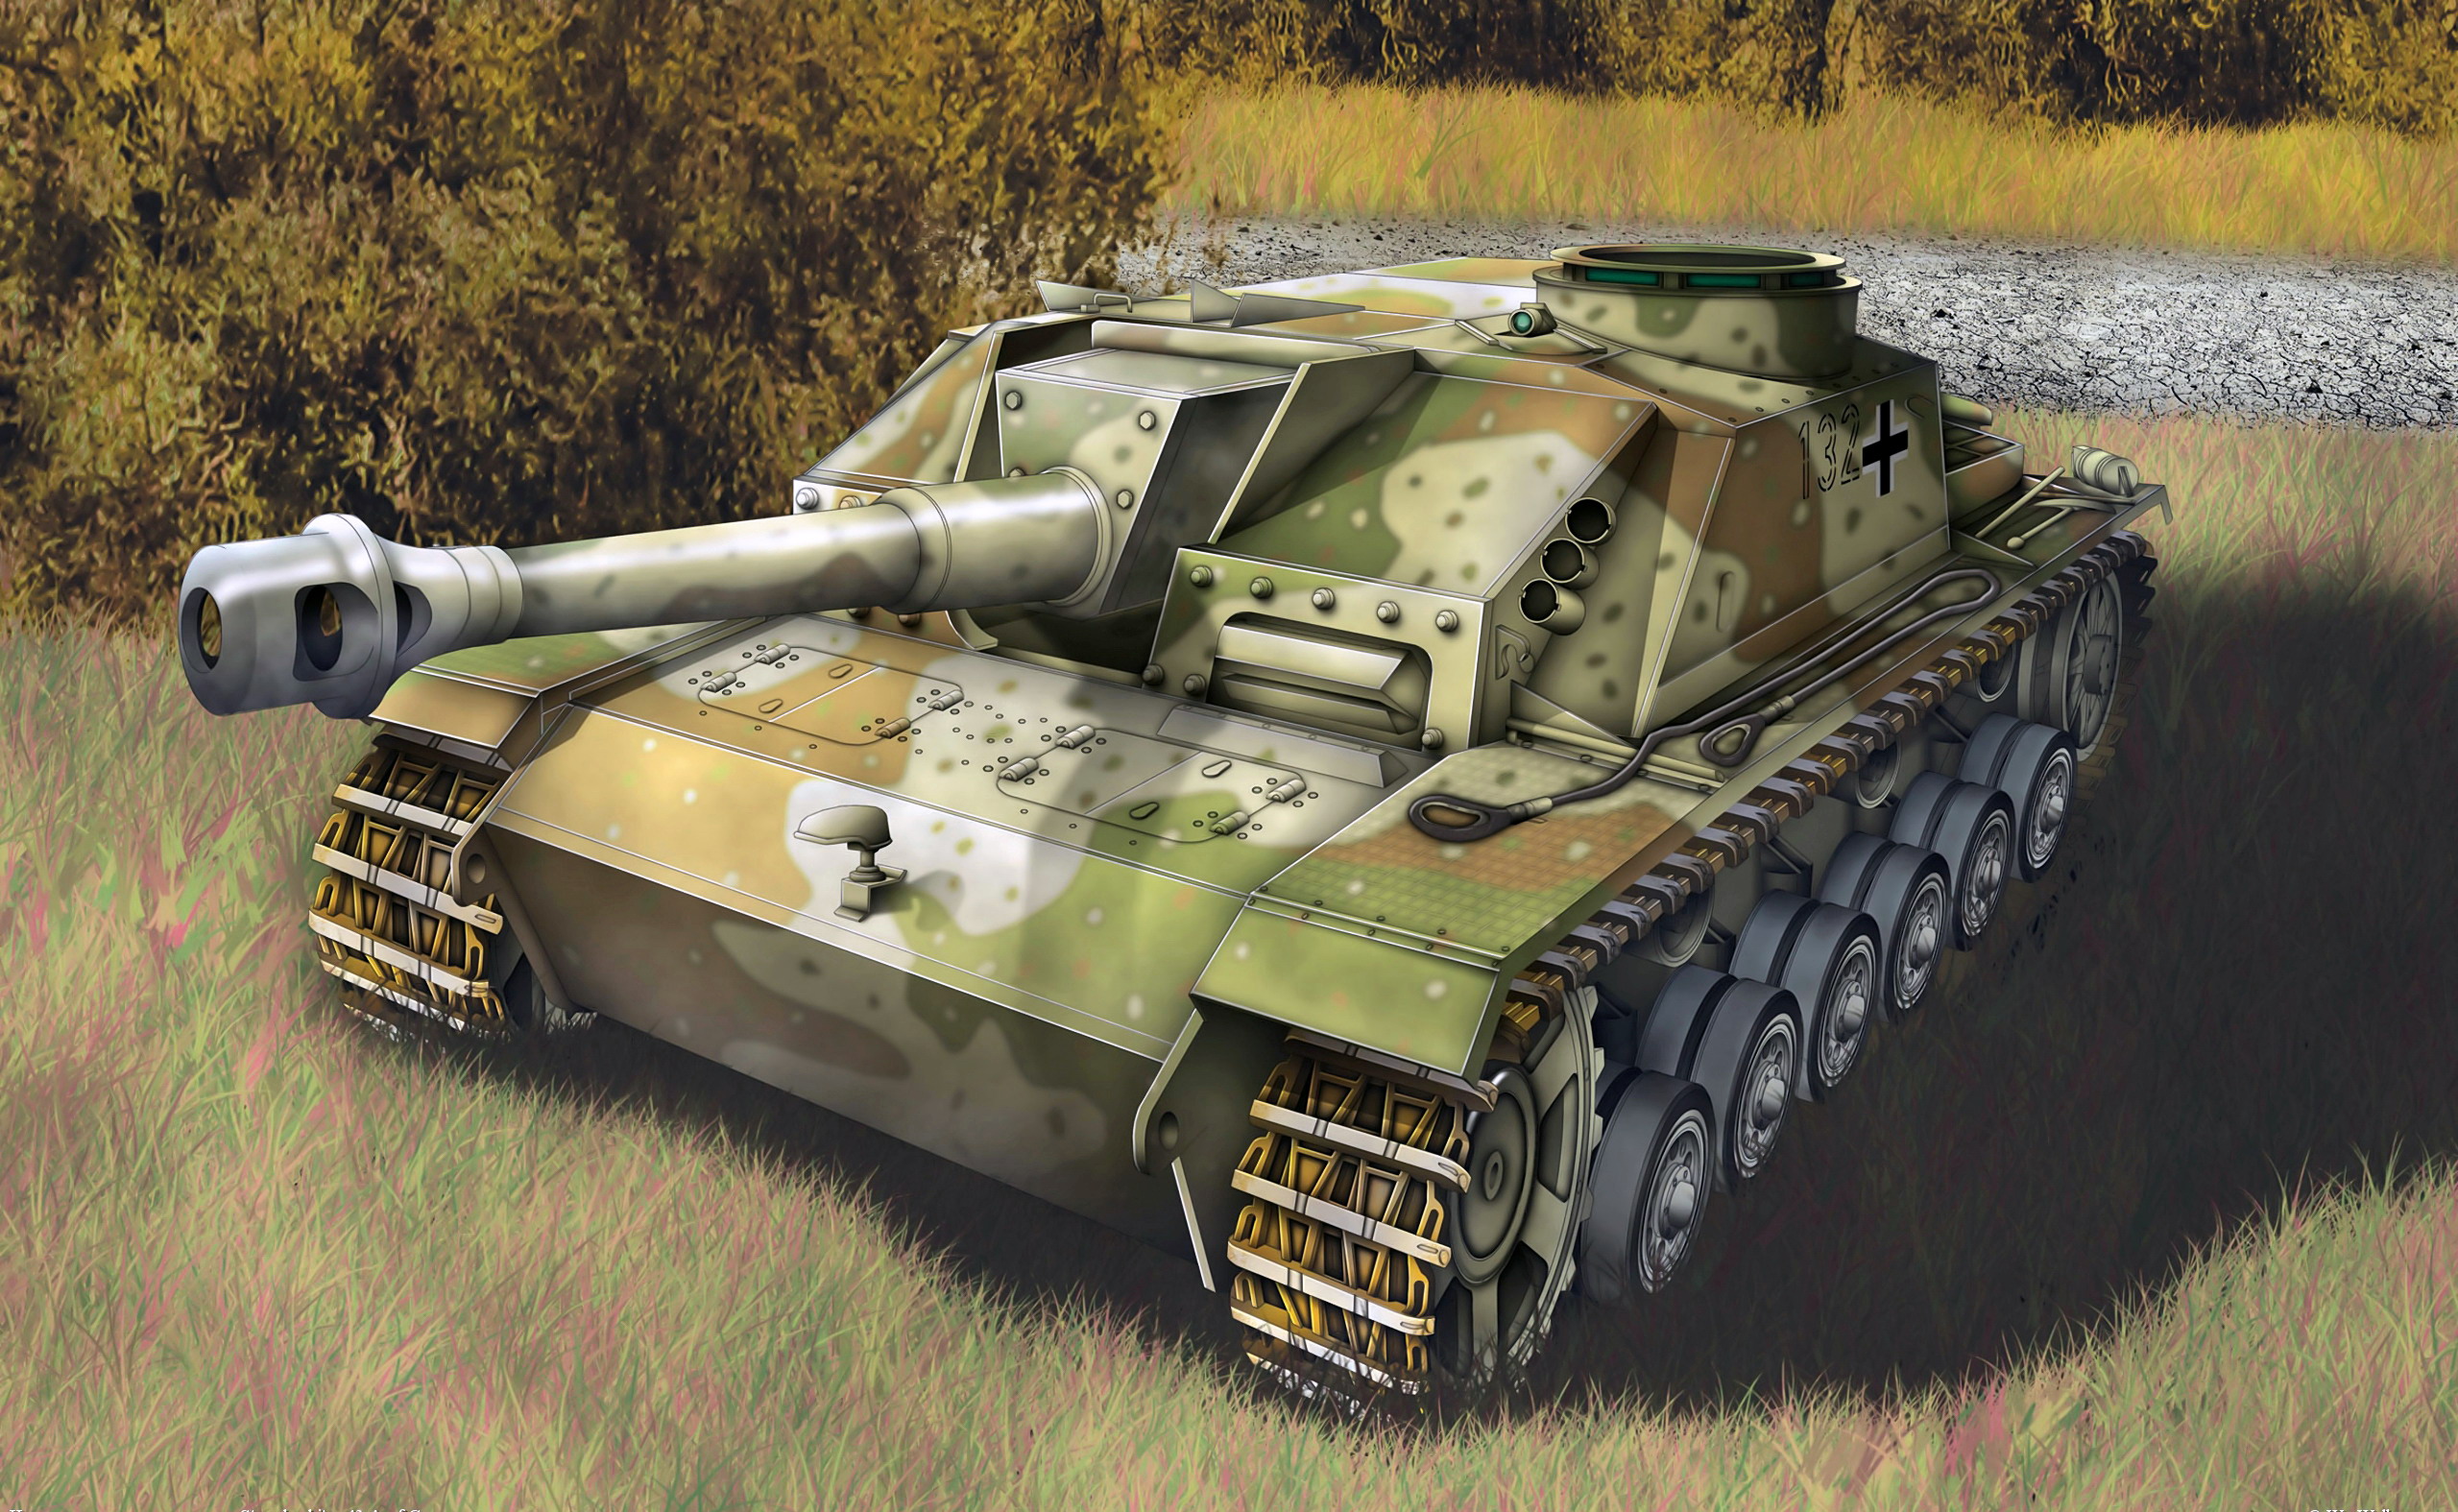 Desenhado Tanque StuH 42 Ausf. G militar, carro de combate, tanques Exército